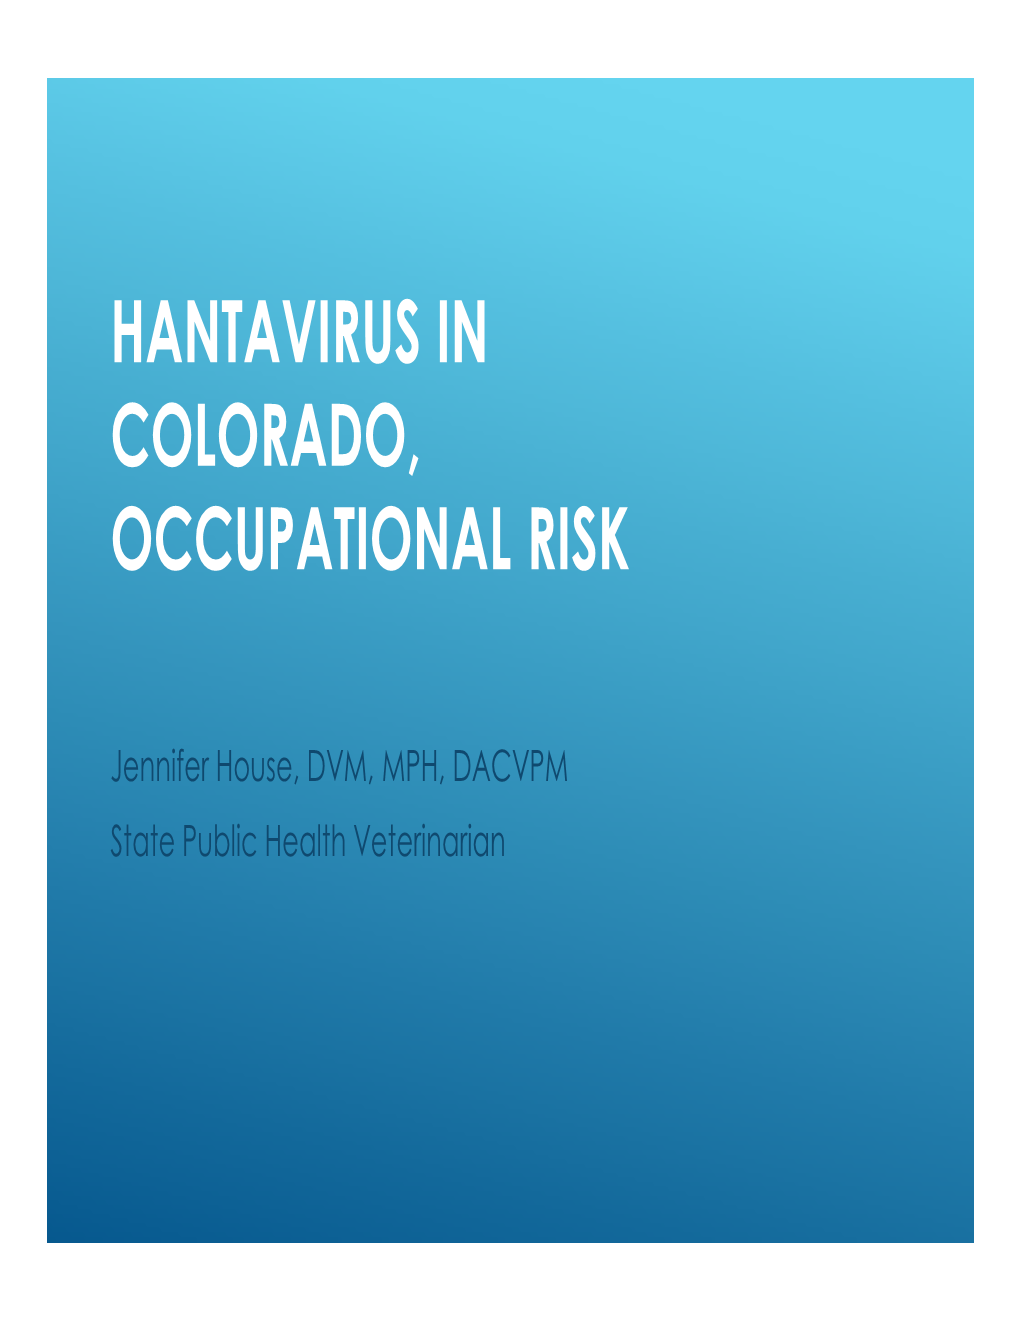 Hantavirus in Colorado, Occupational Risk